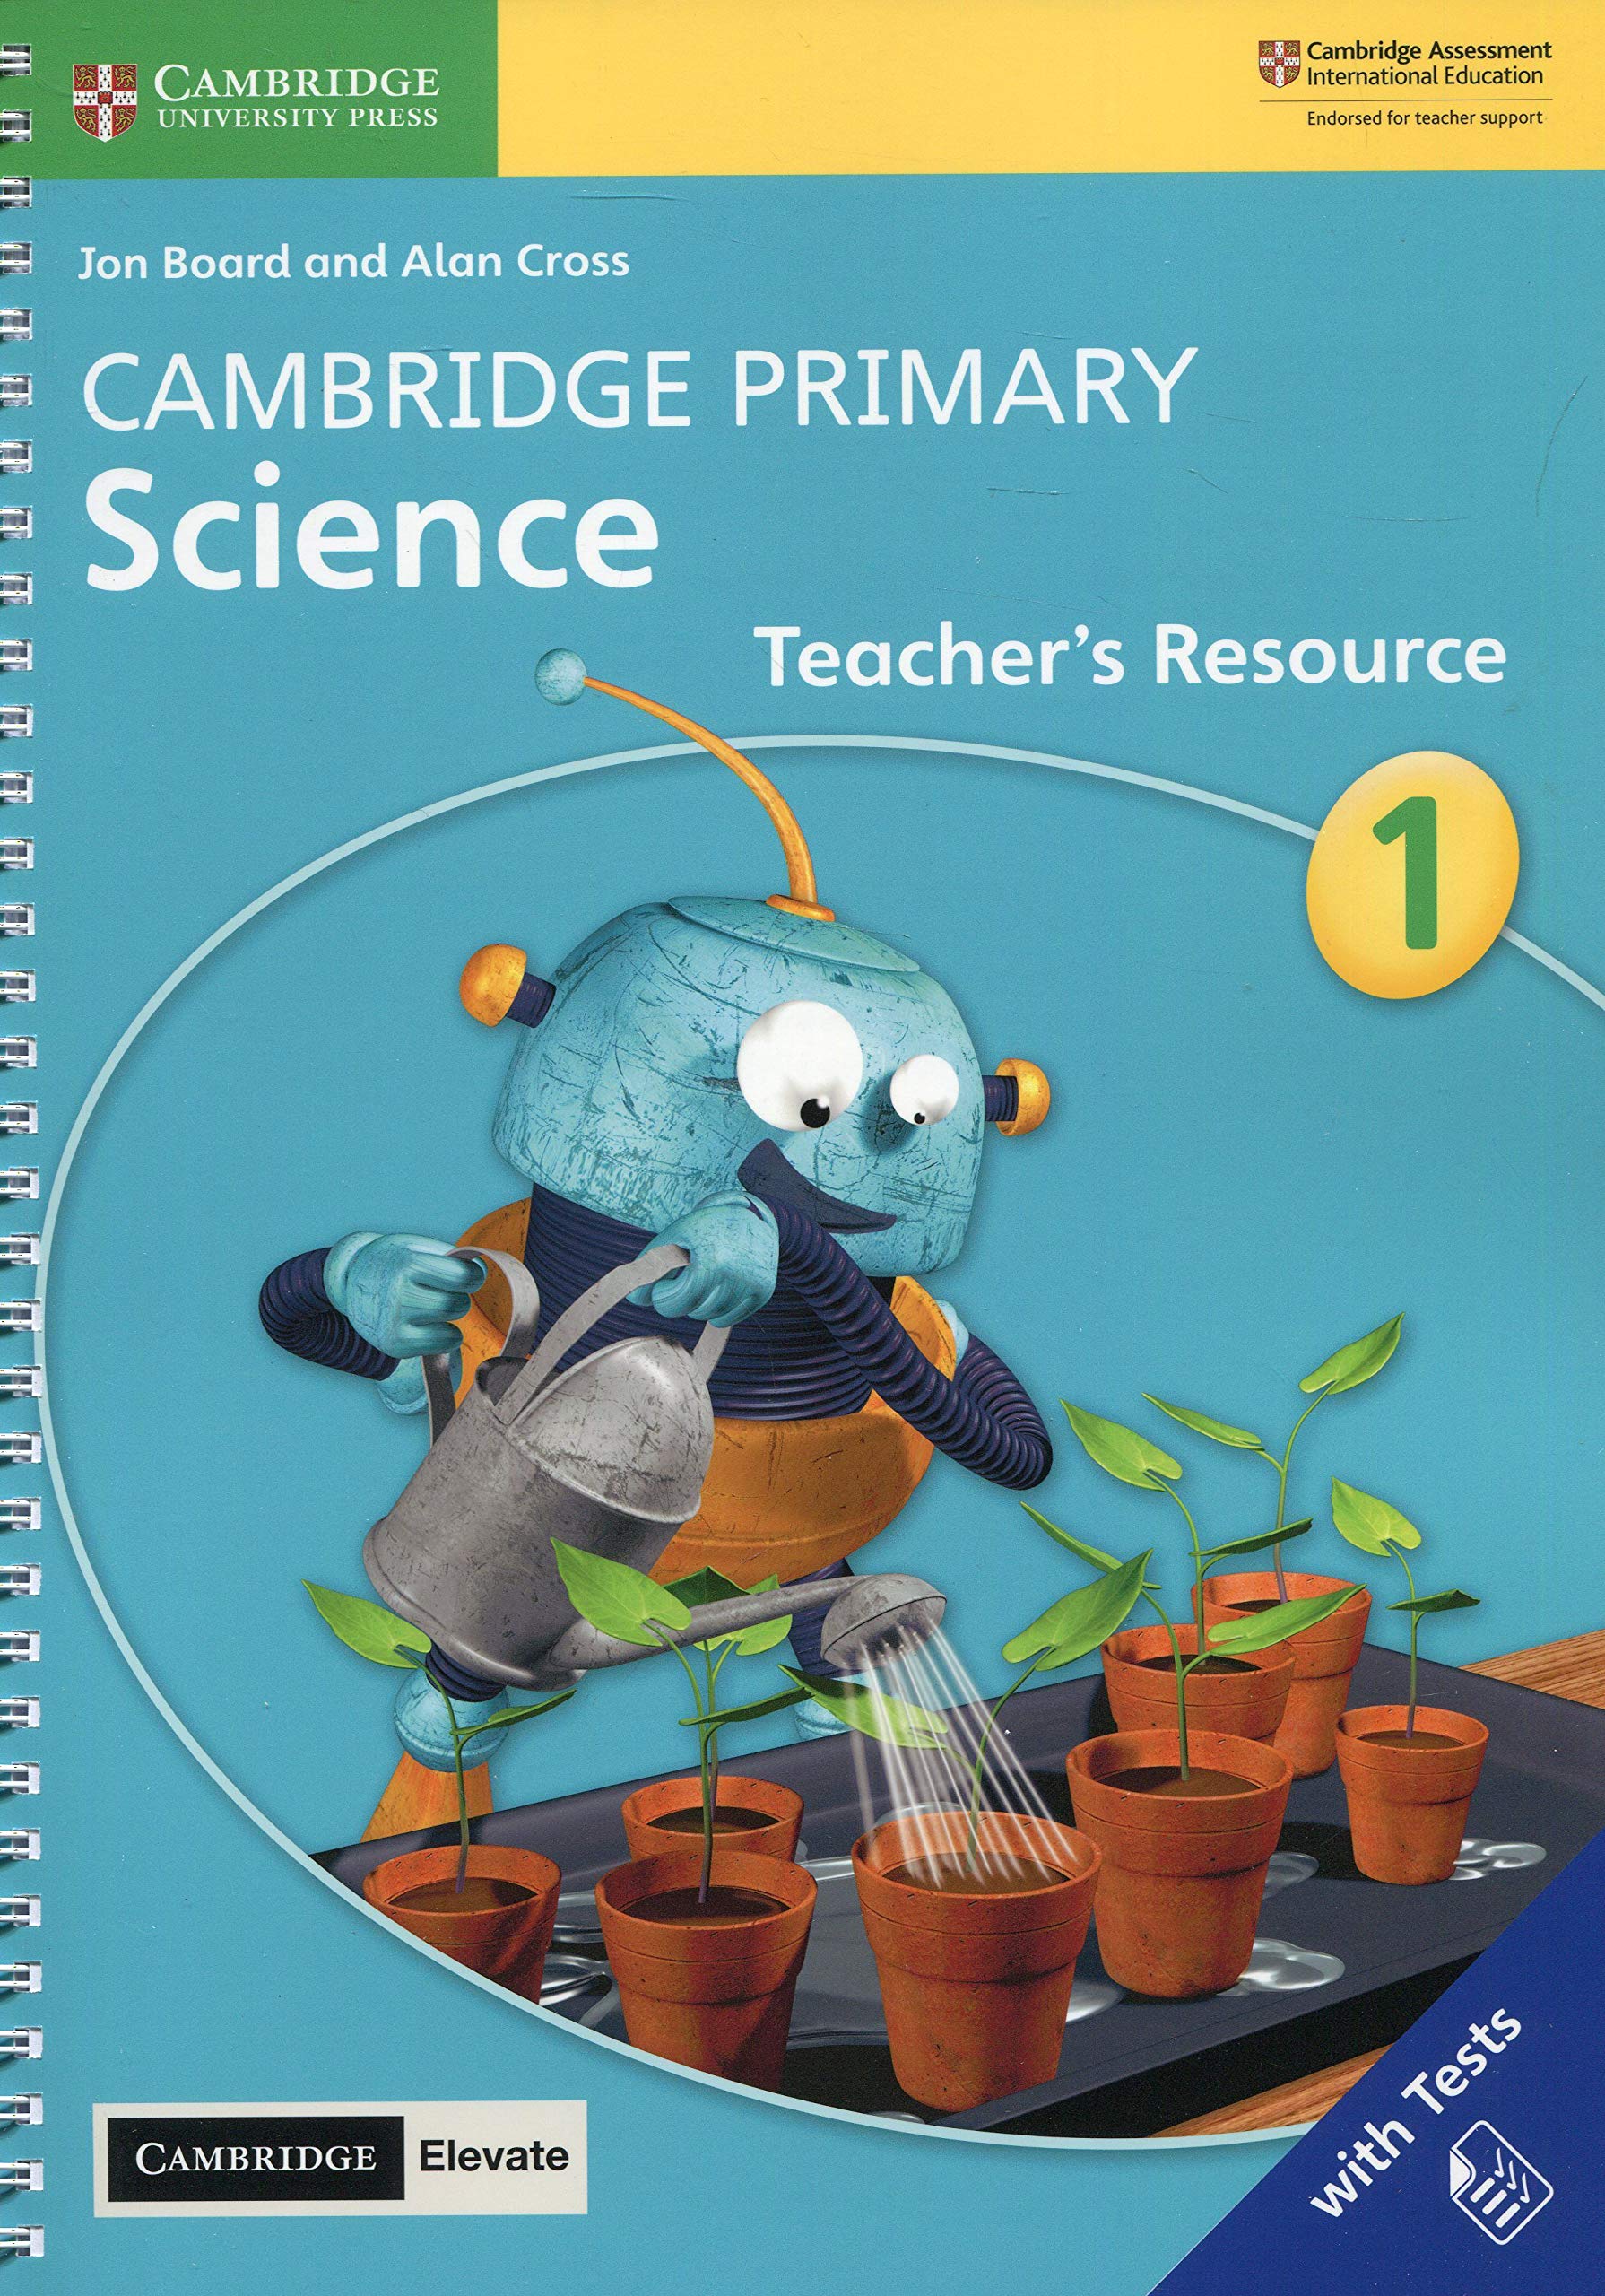 Cambridge teachers book. Cambridge Primary Science. Cambridge Science book. Cambridge Primary Science 1. Cambridge Primary Science Stage 2 Learner's book.